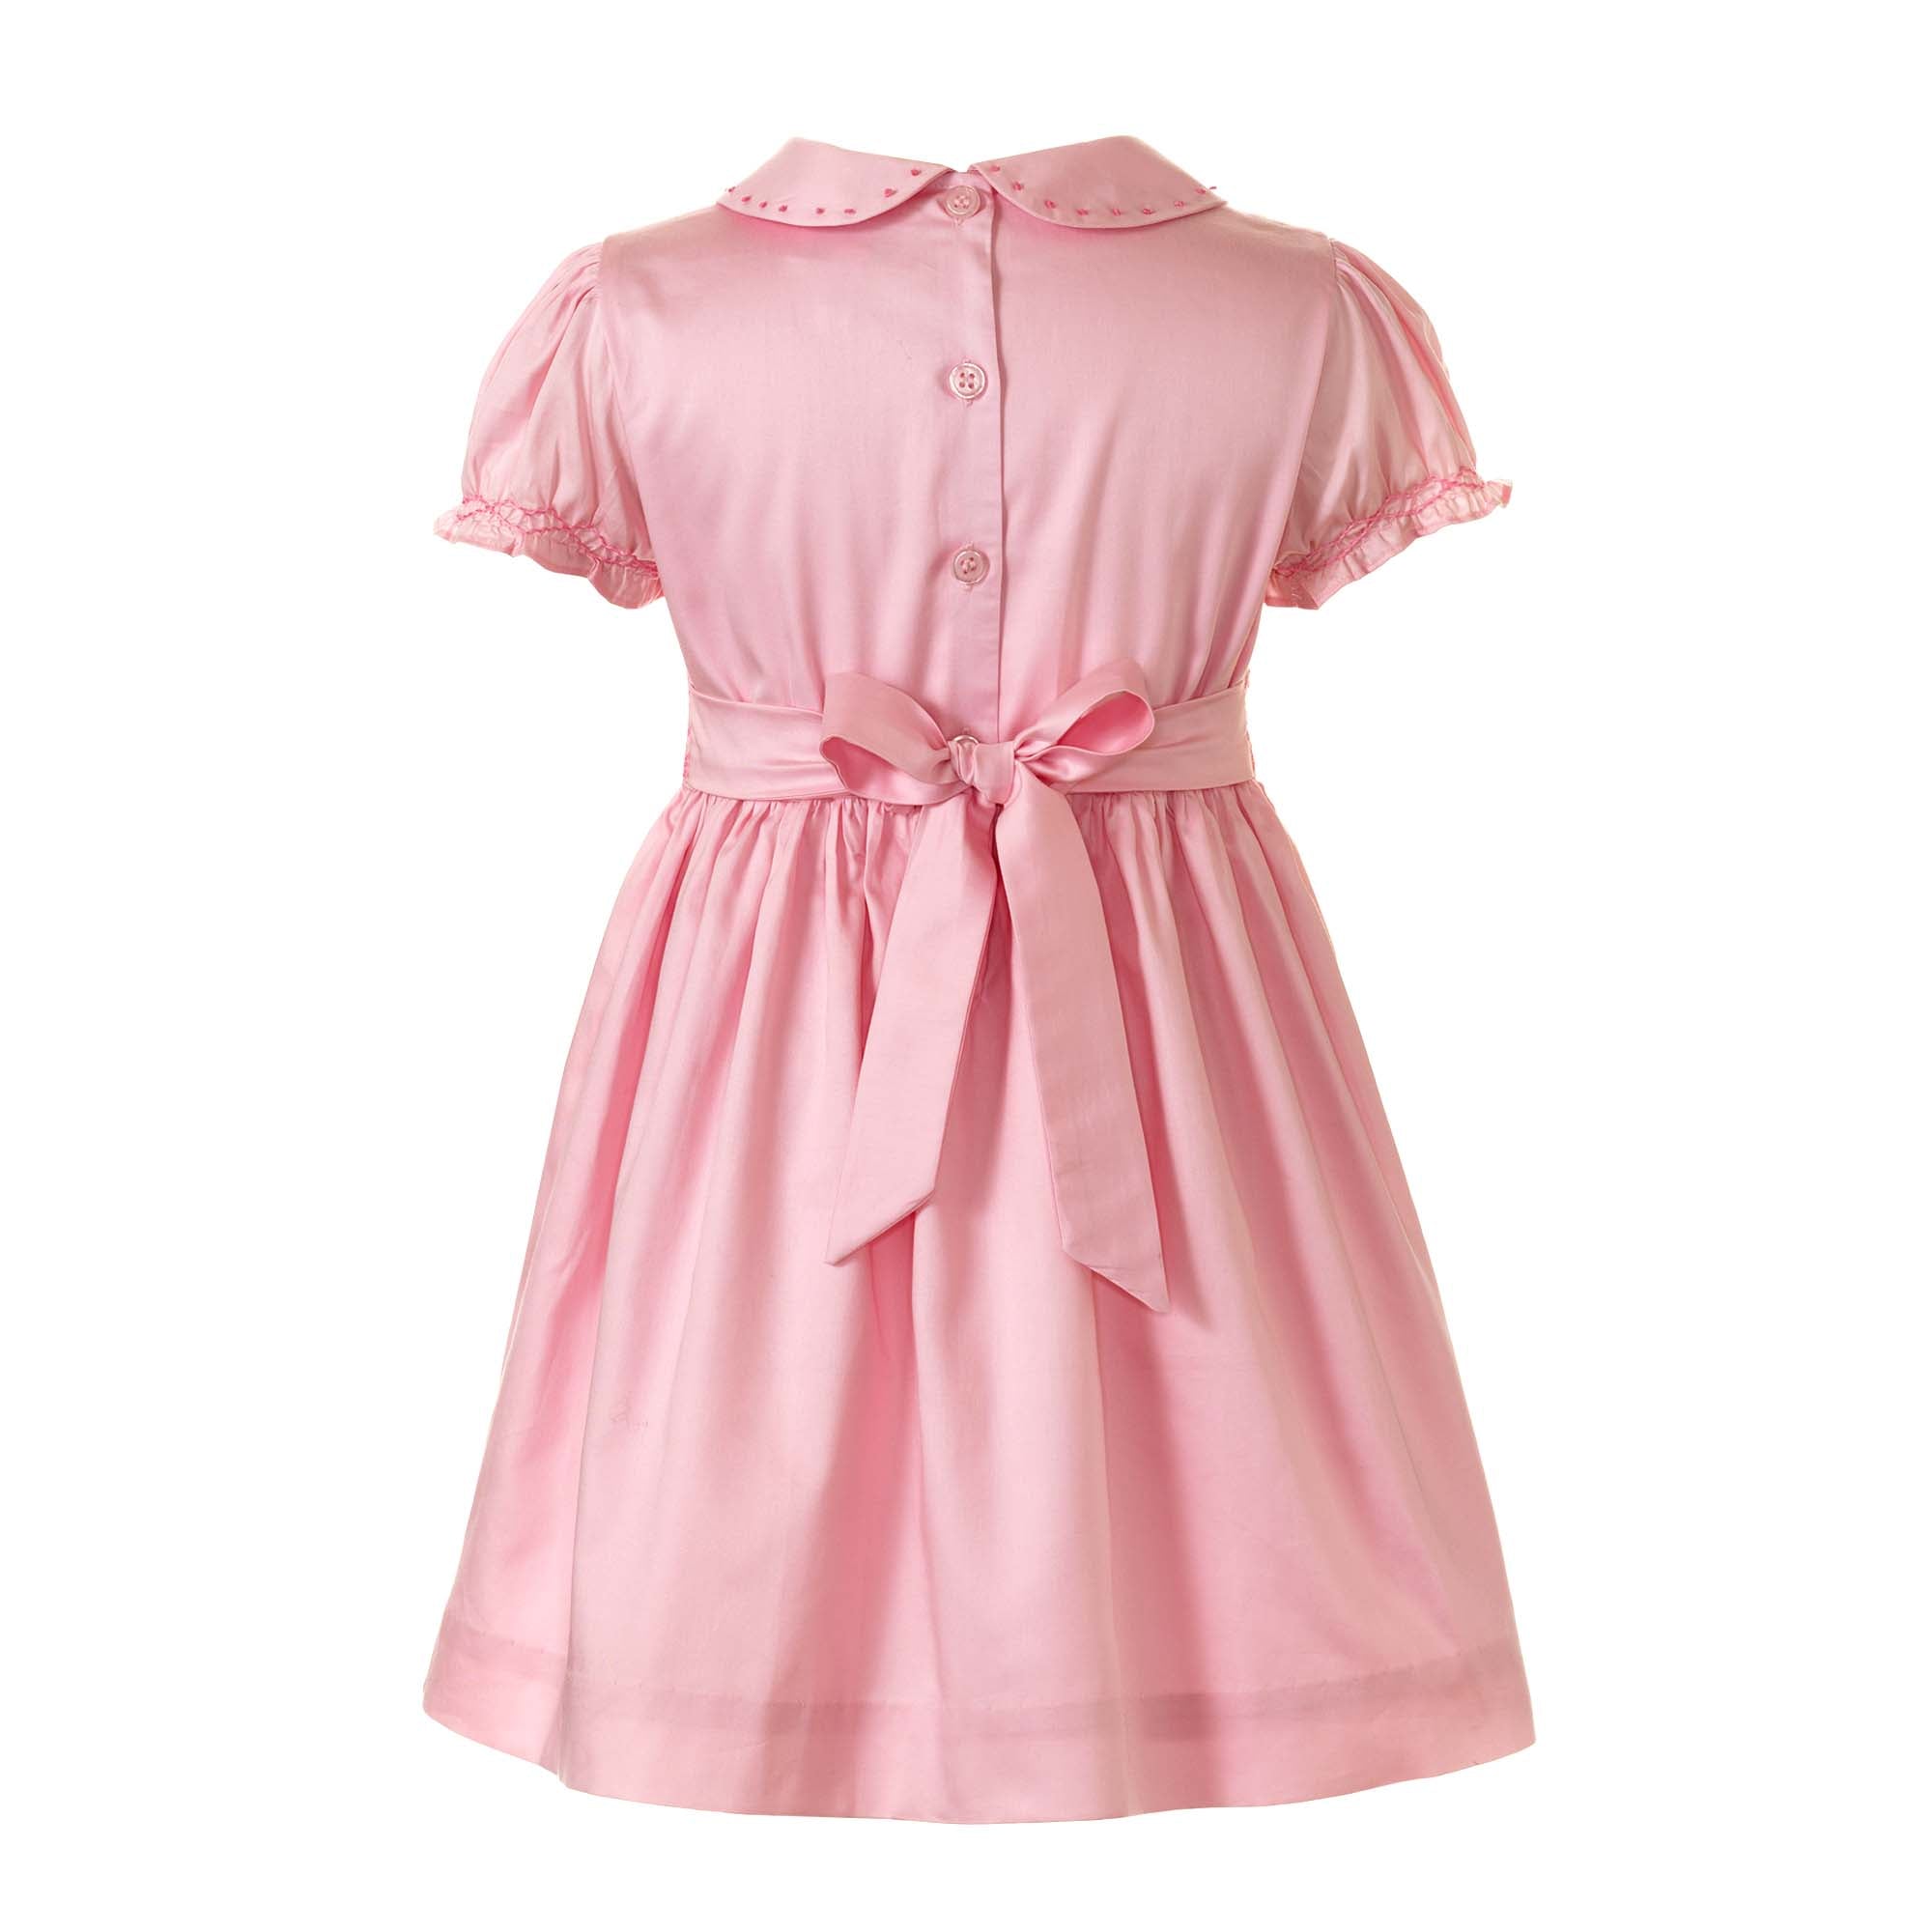 Pink Bow Smocked Dress